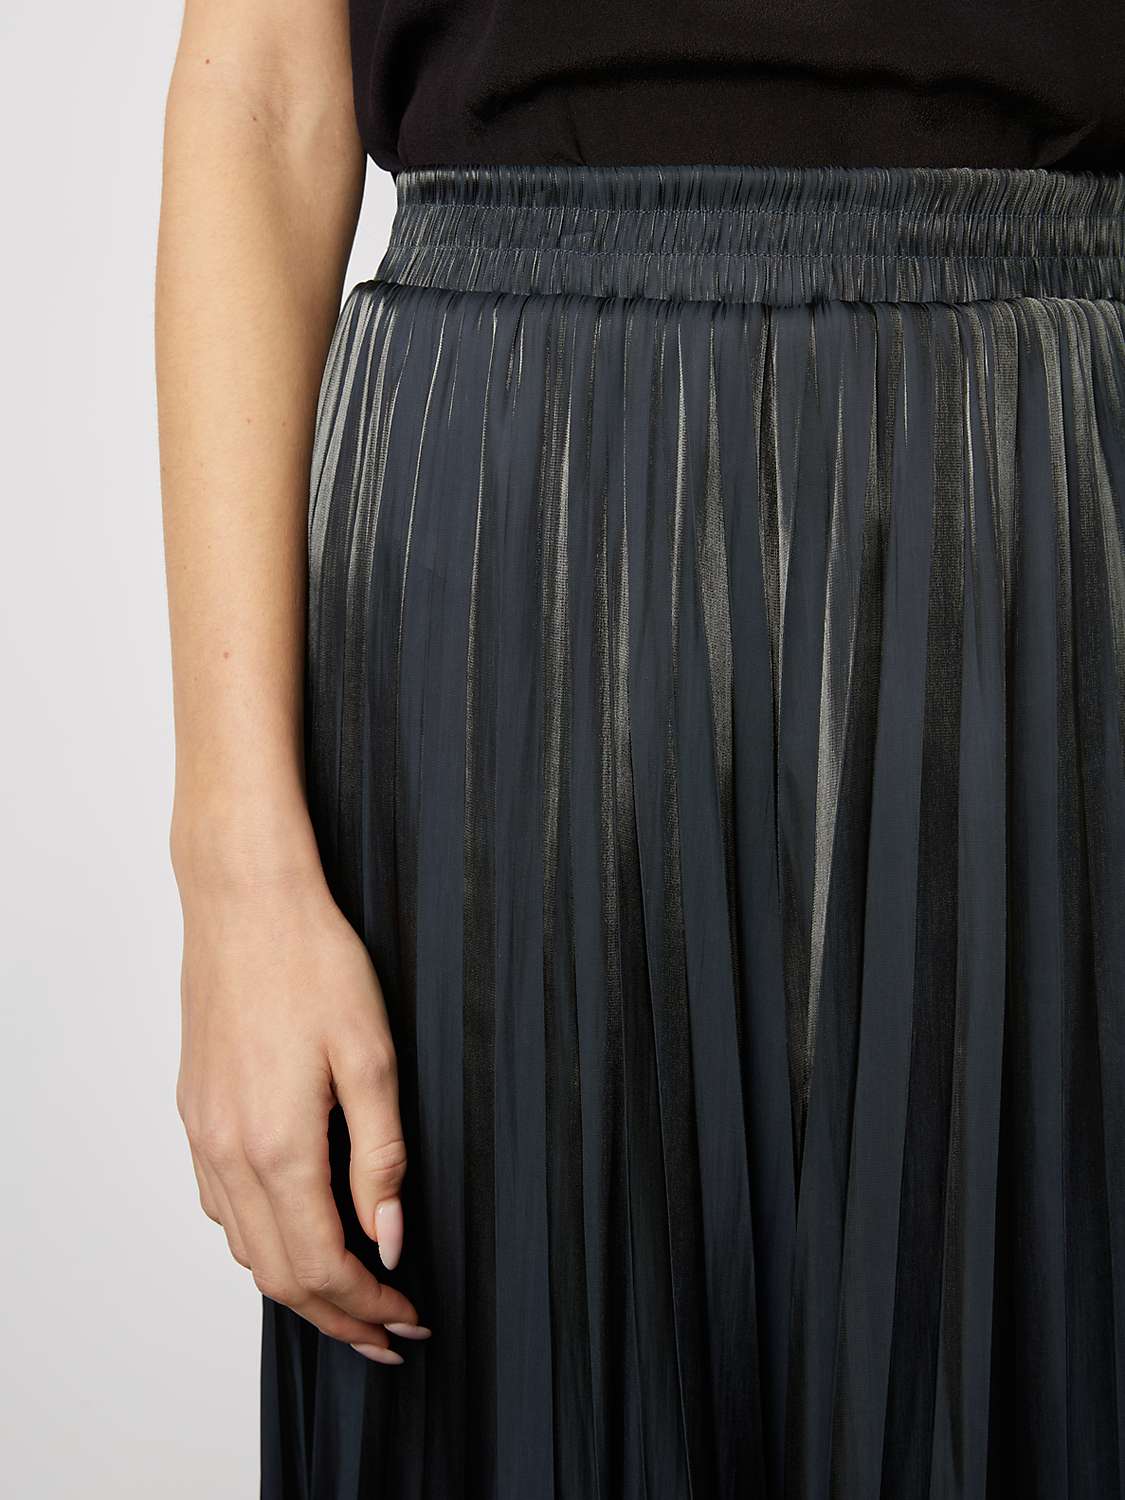 Buy Gerard Darel Dekra Pleated Midi Skirt, Navy Online at johnlewis.com